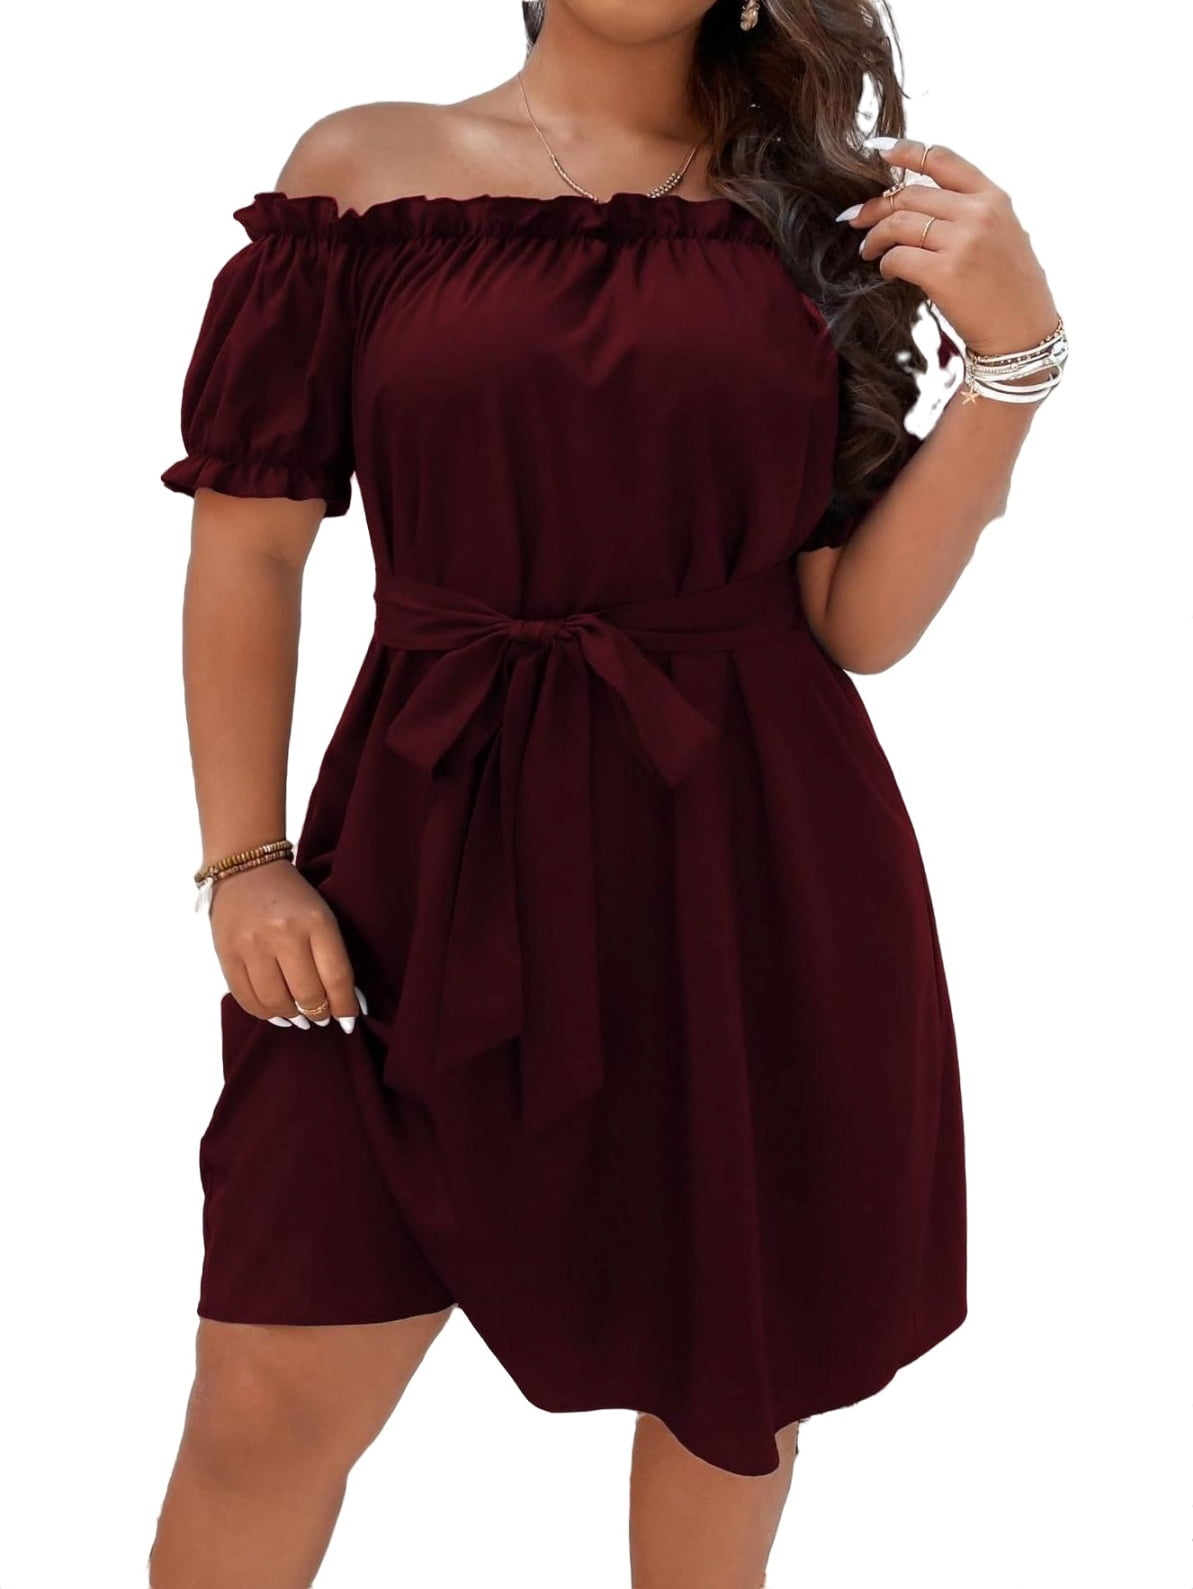 burgundy casual dress